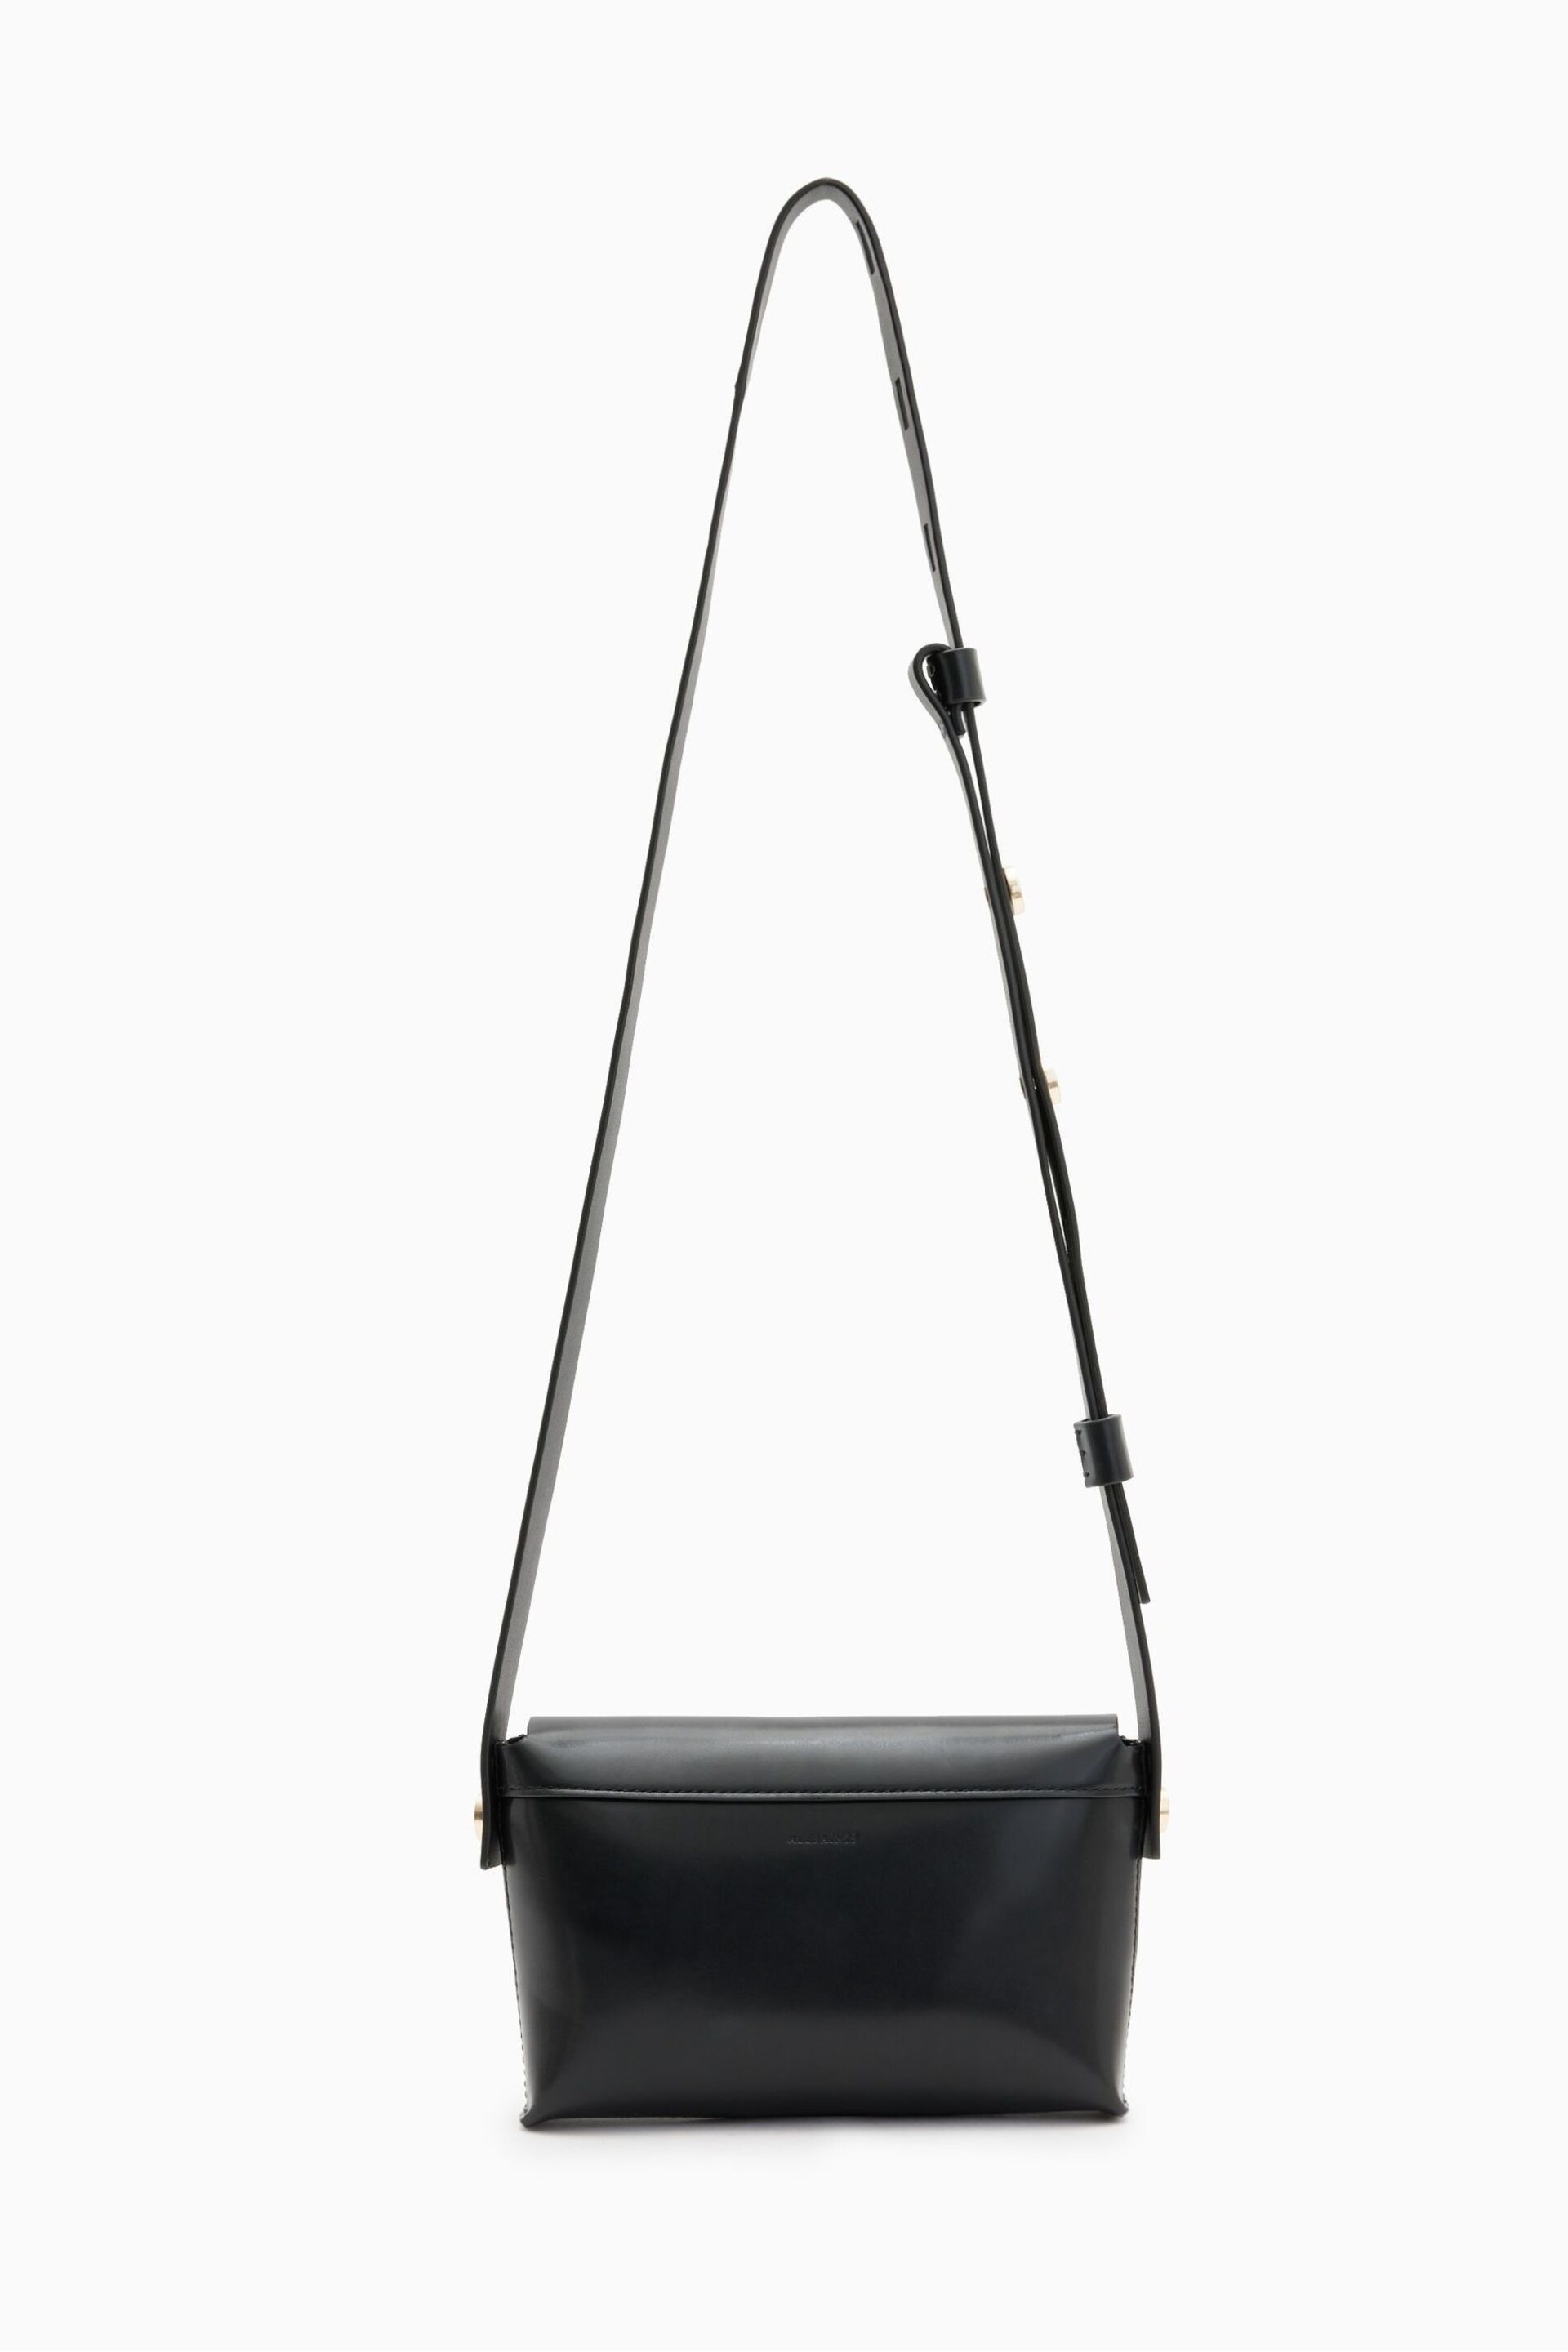 AllSaints Black Cross-Body Francine Bag - Image 4 of 8